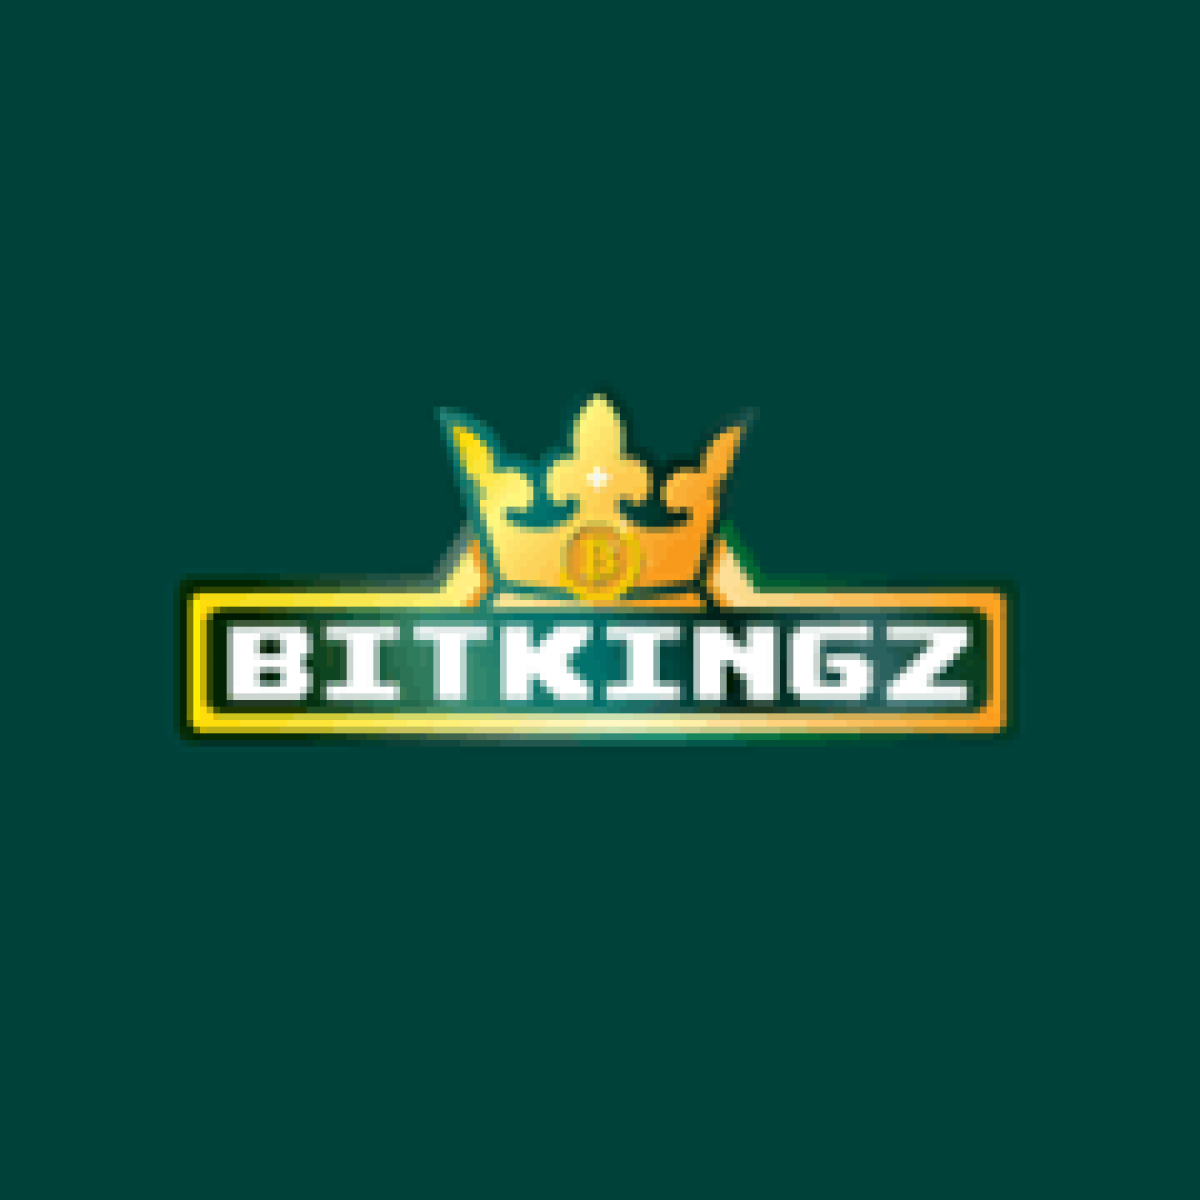 Bitkingz Casino No Deposit Bonus Code